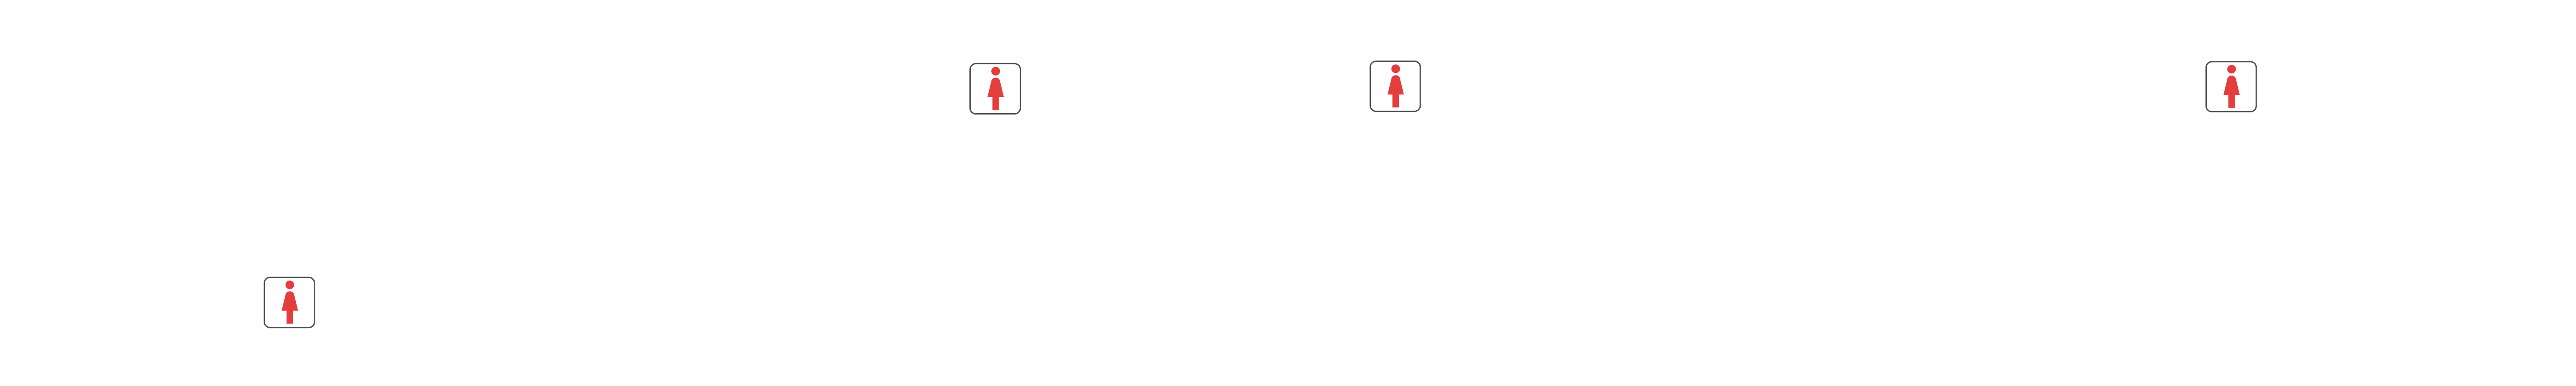 Female restroom